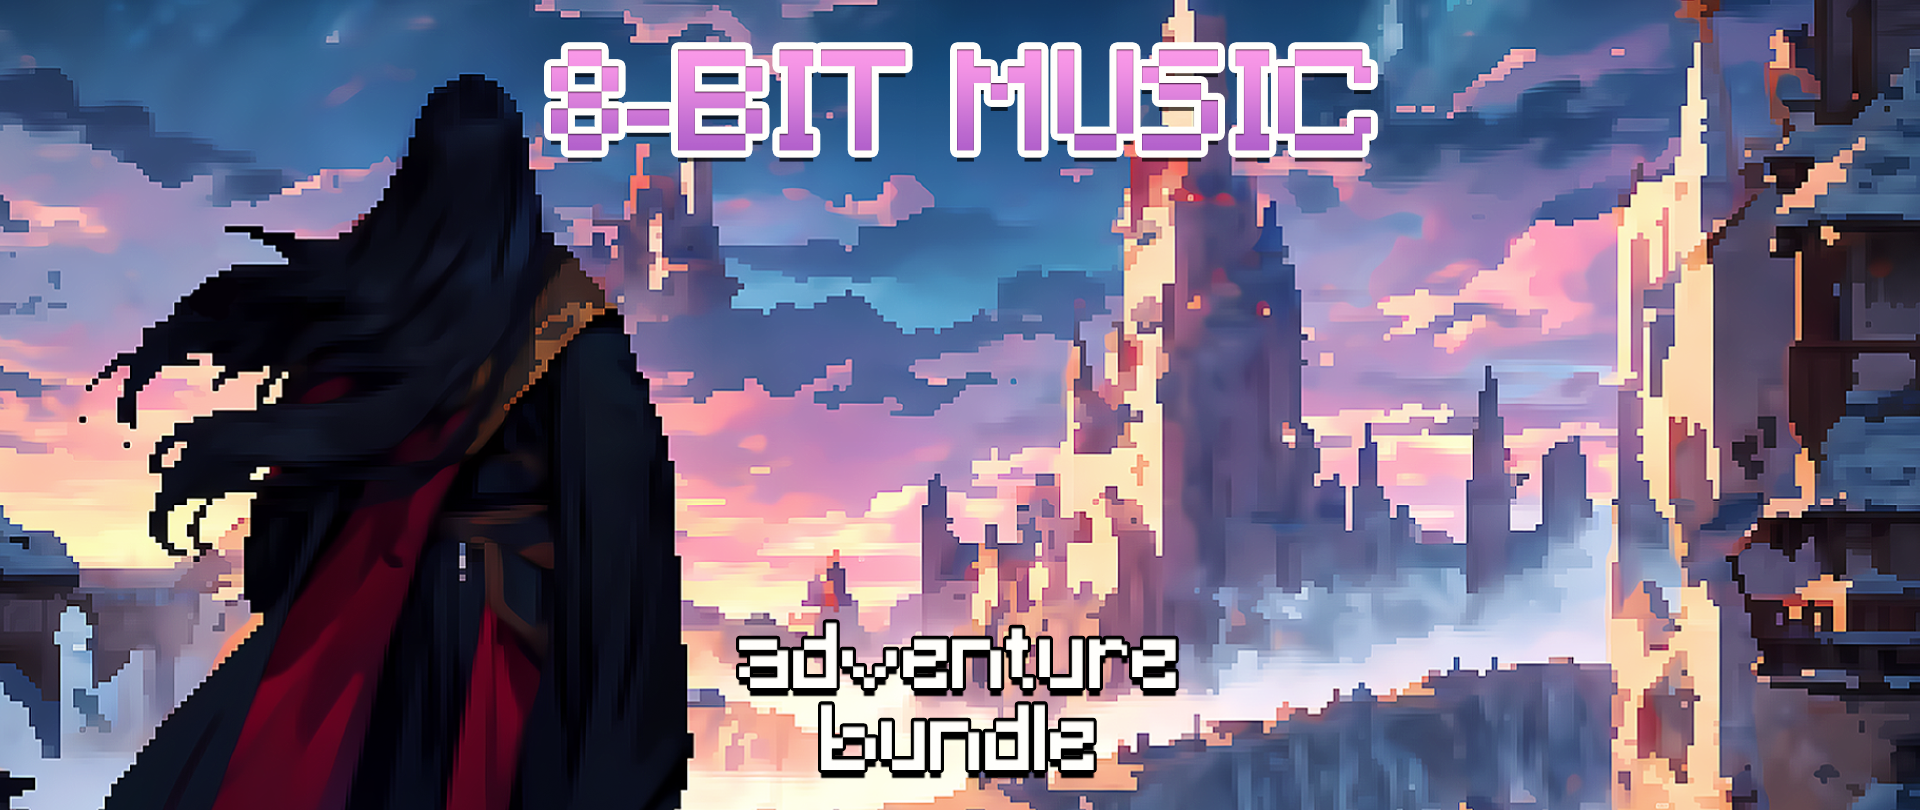 8-BIT Adventure Music Bundle